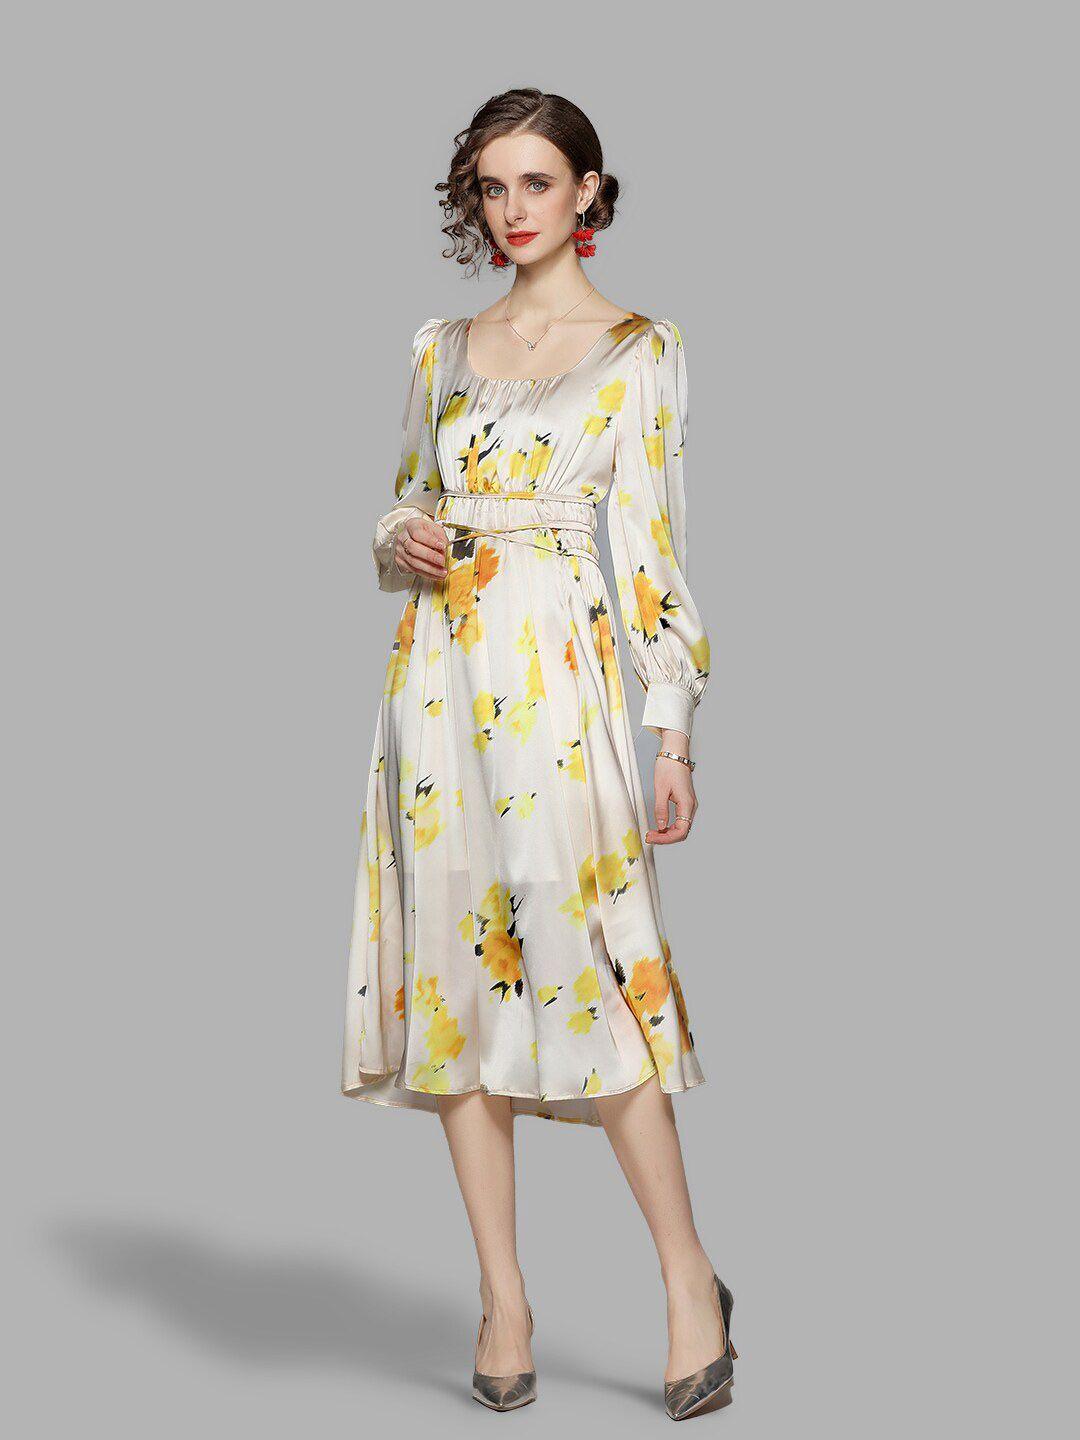 jc collection white & yellow floral midi dress